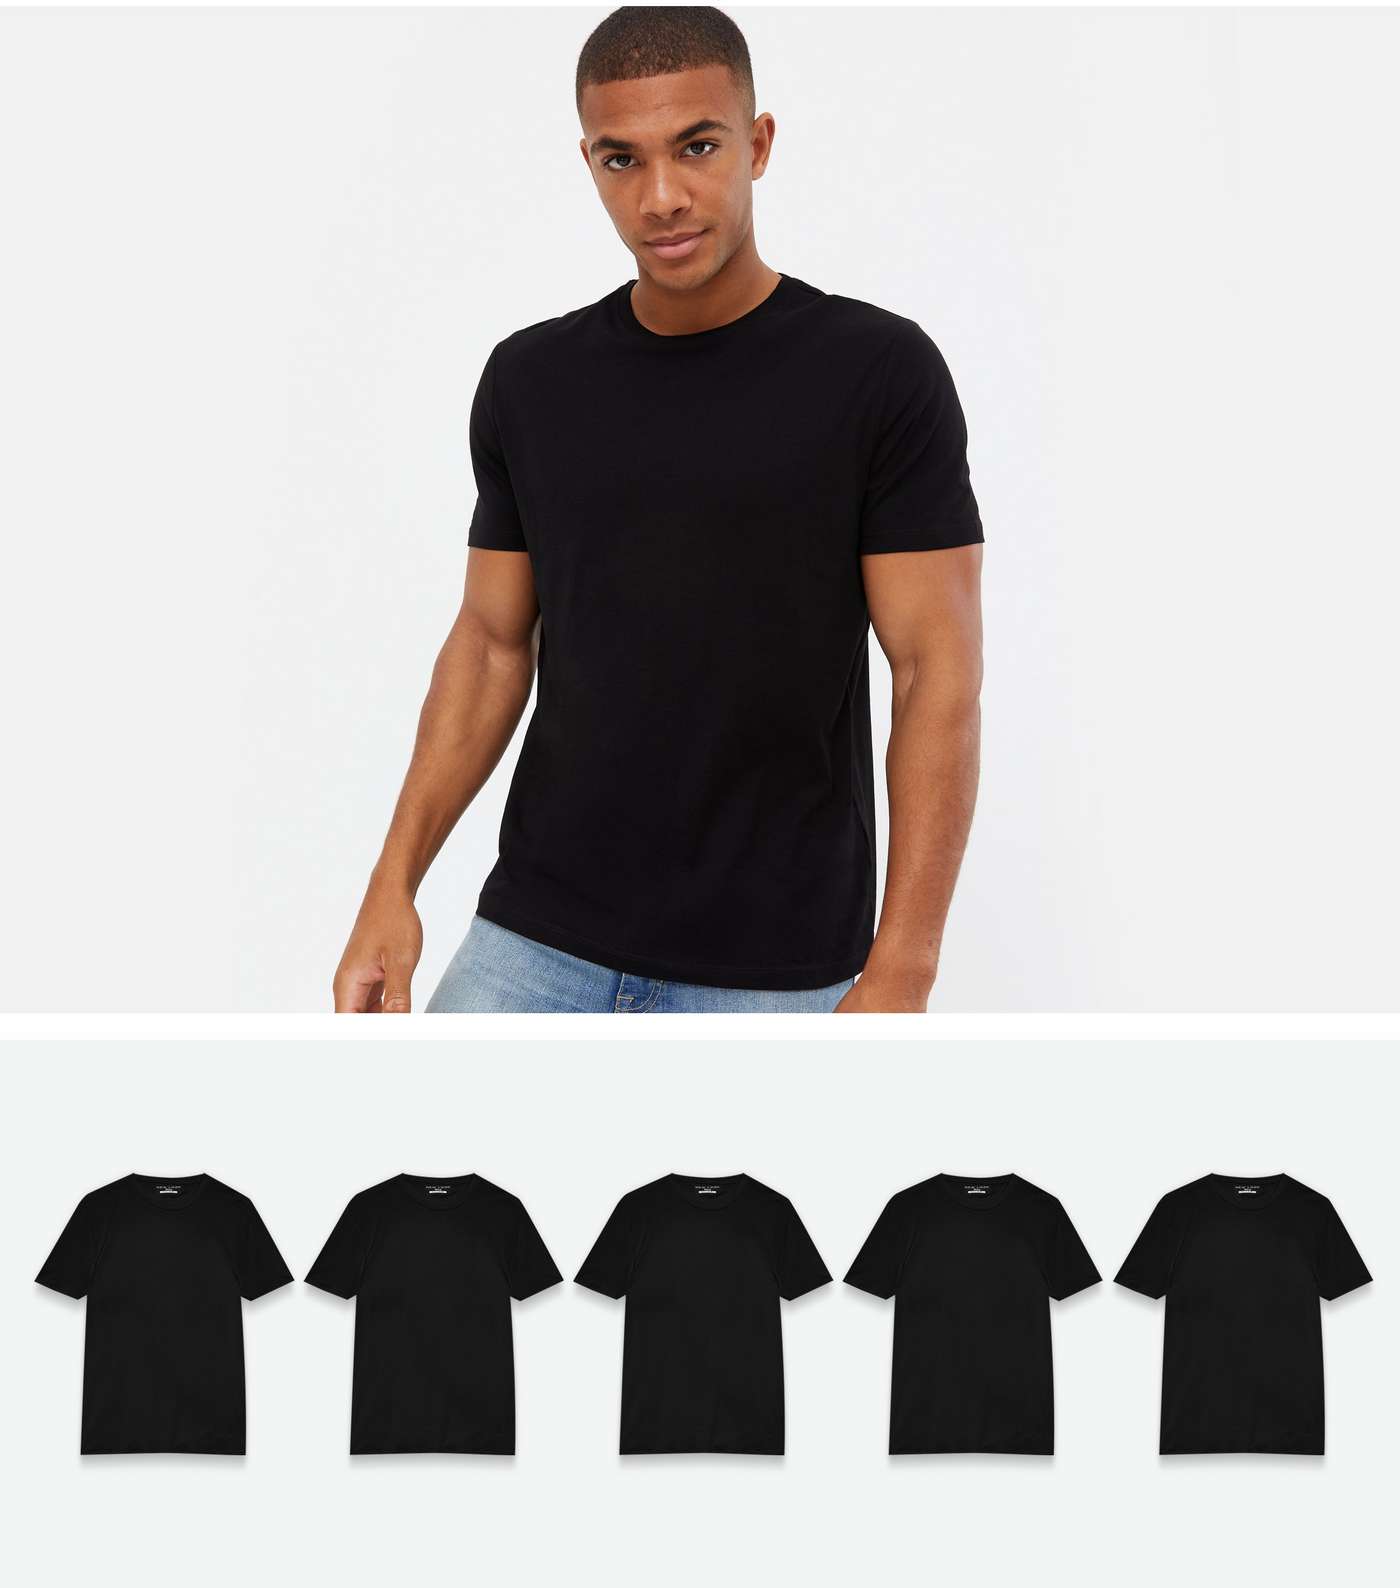 5 Pack Black Crew T-Shirts